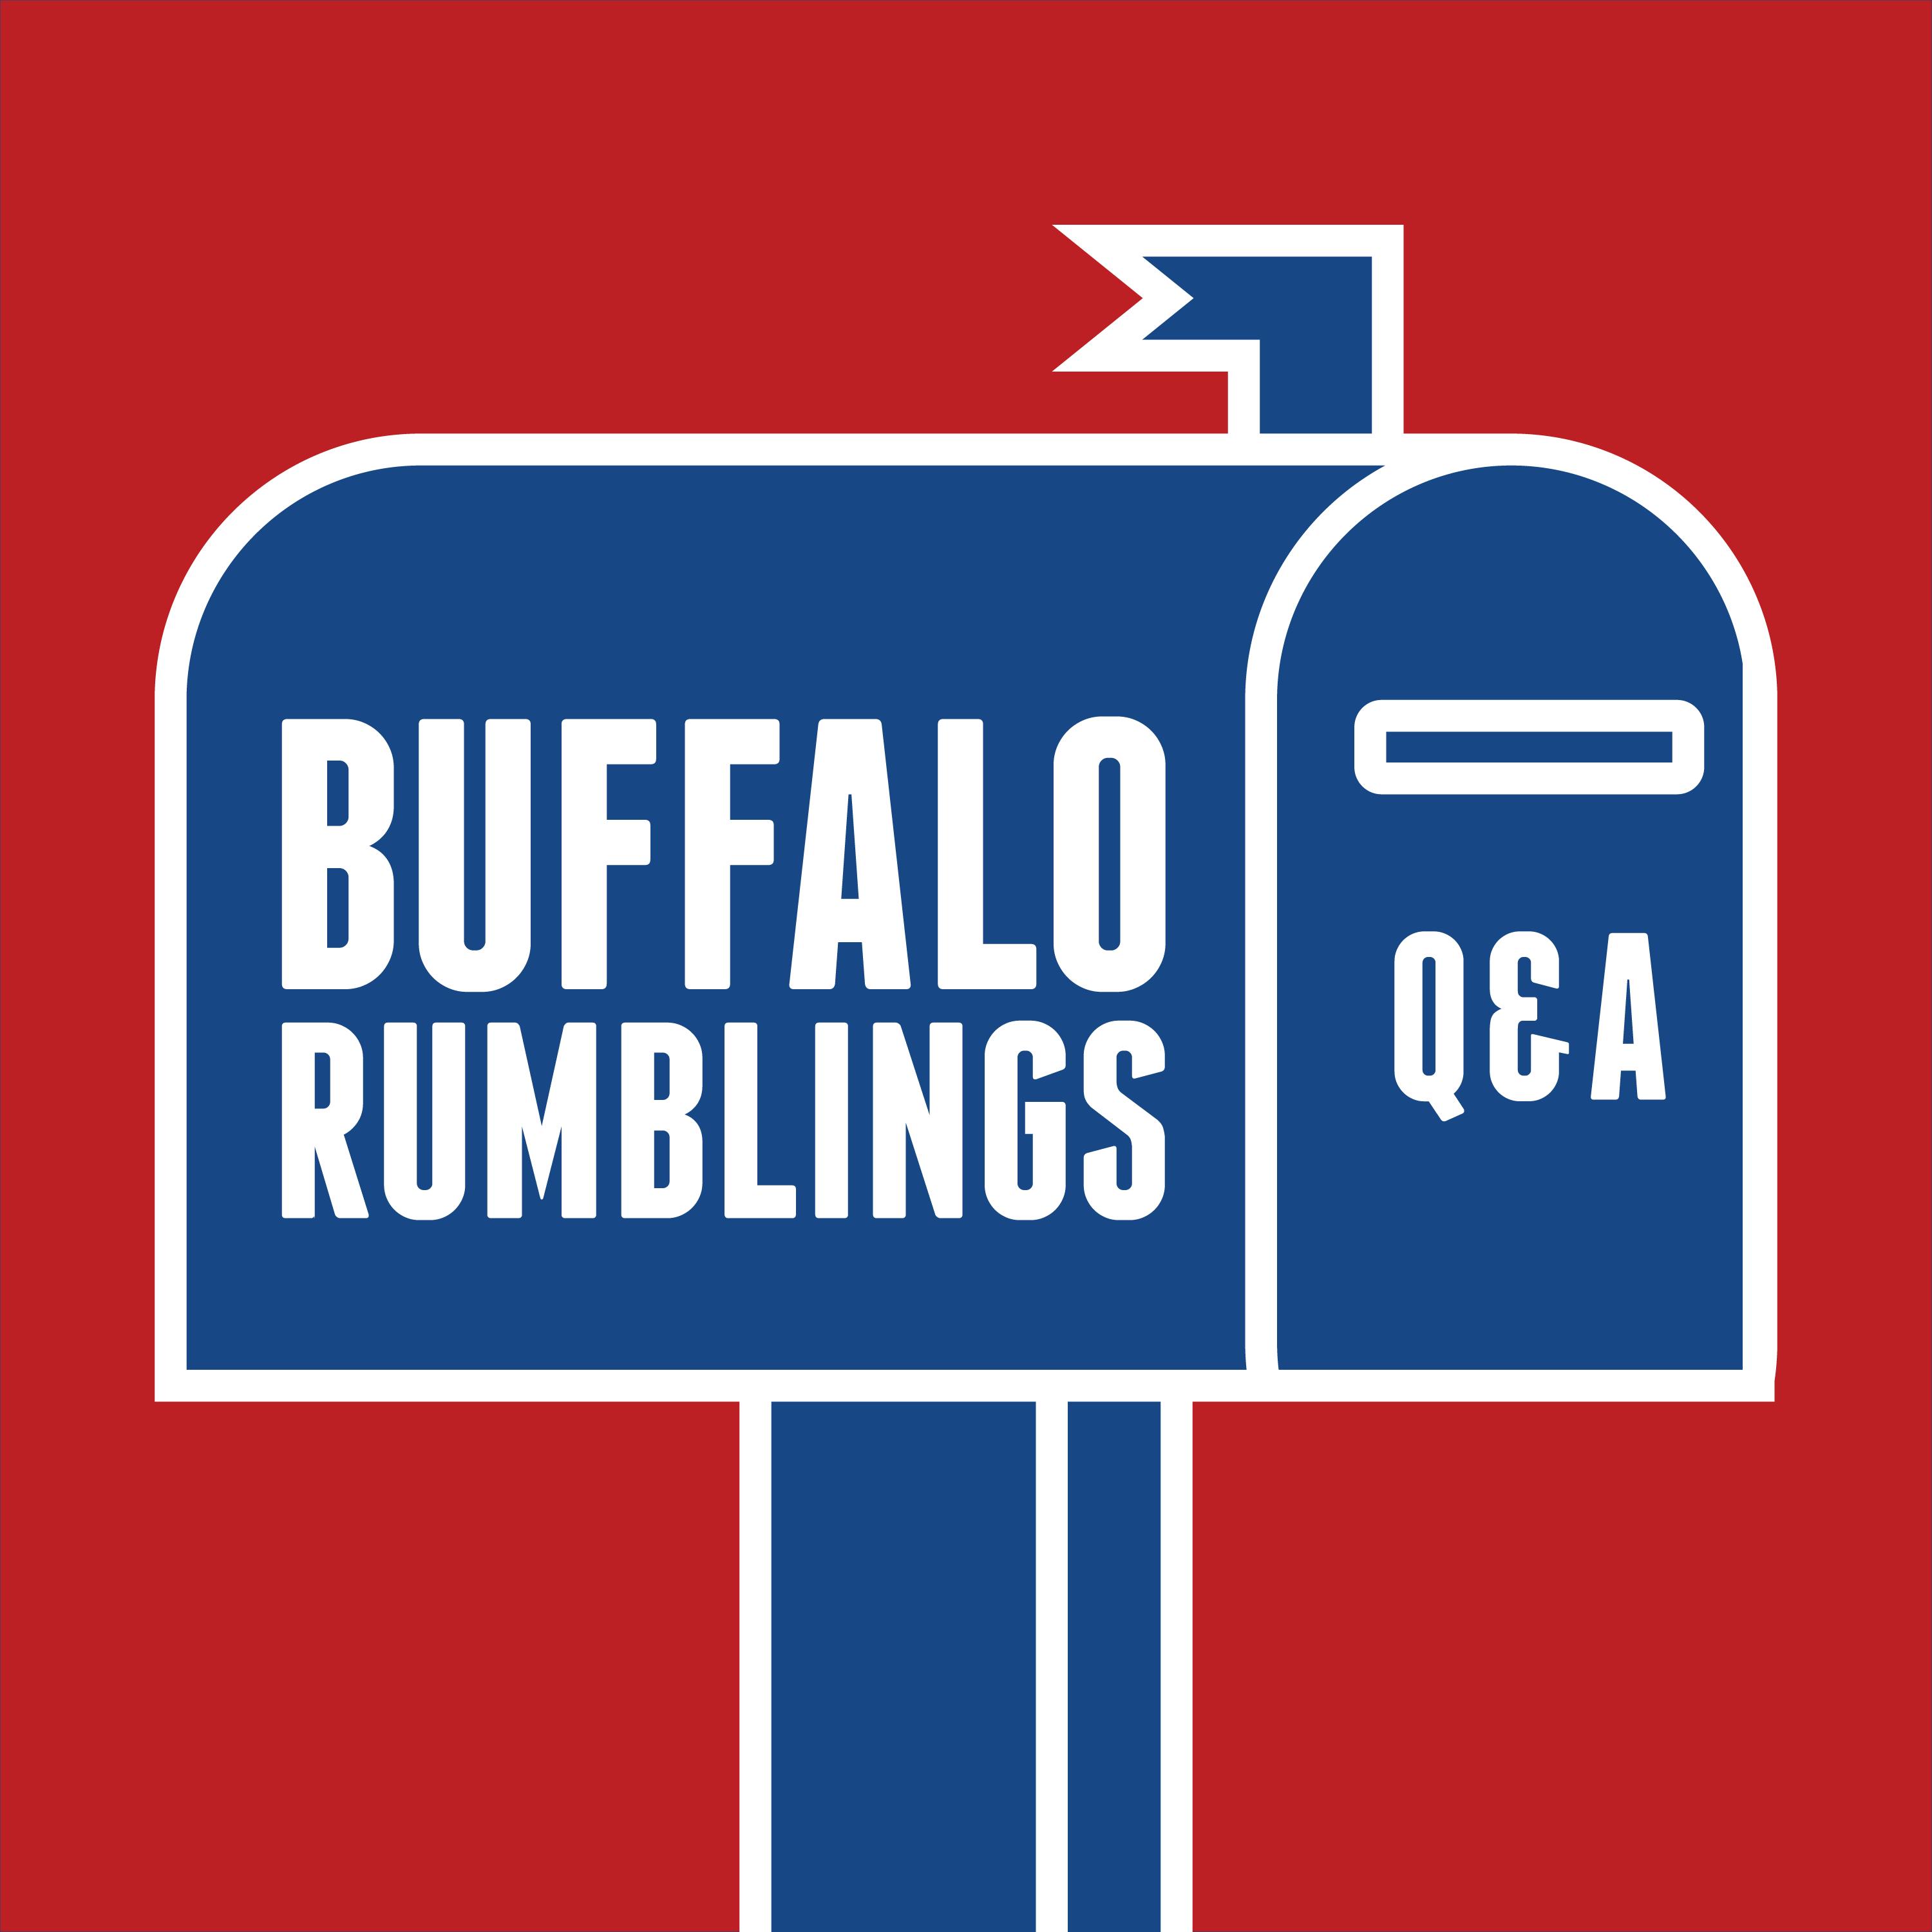 Q&A: Bills' playoff picture, offense struggles with blitz & deep ball